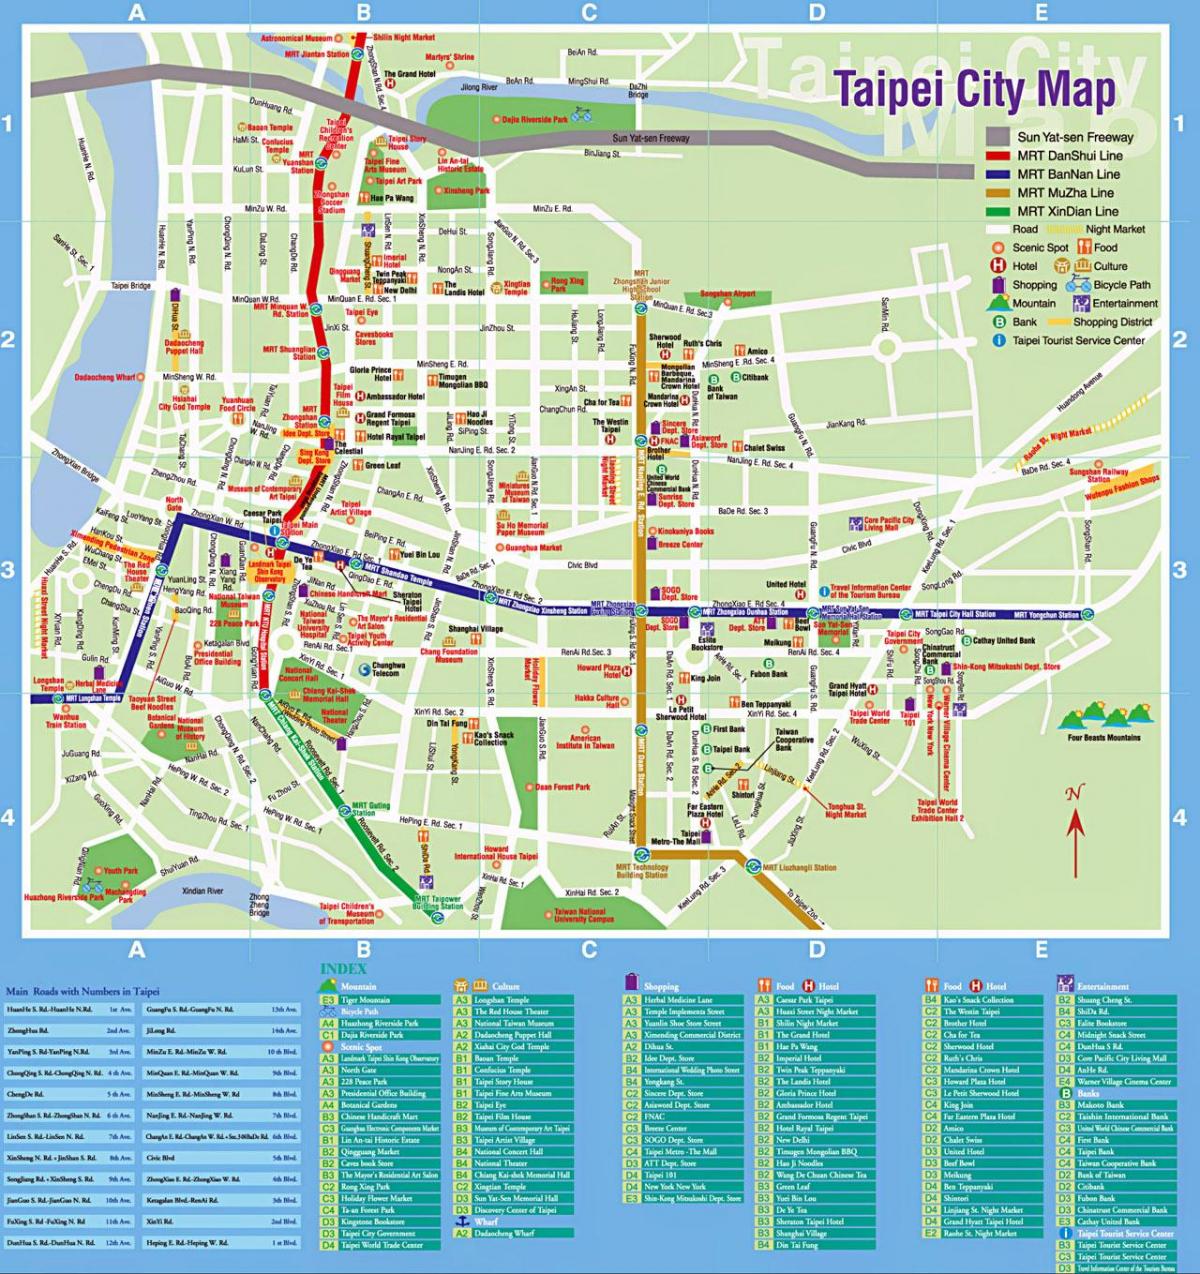 Taipei turismo lekuak mapa